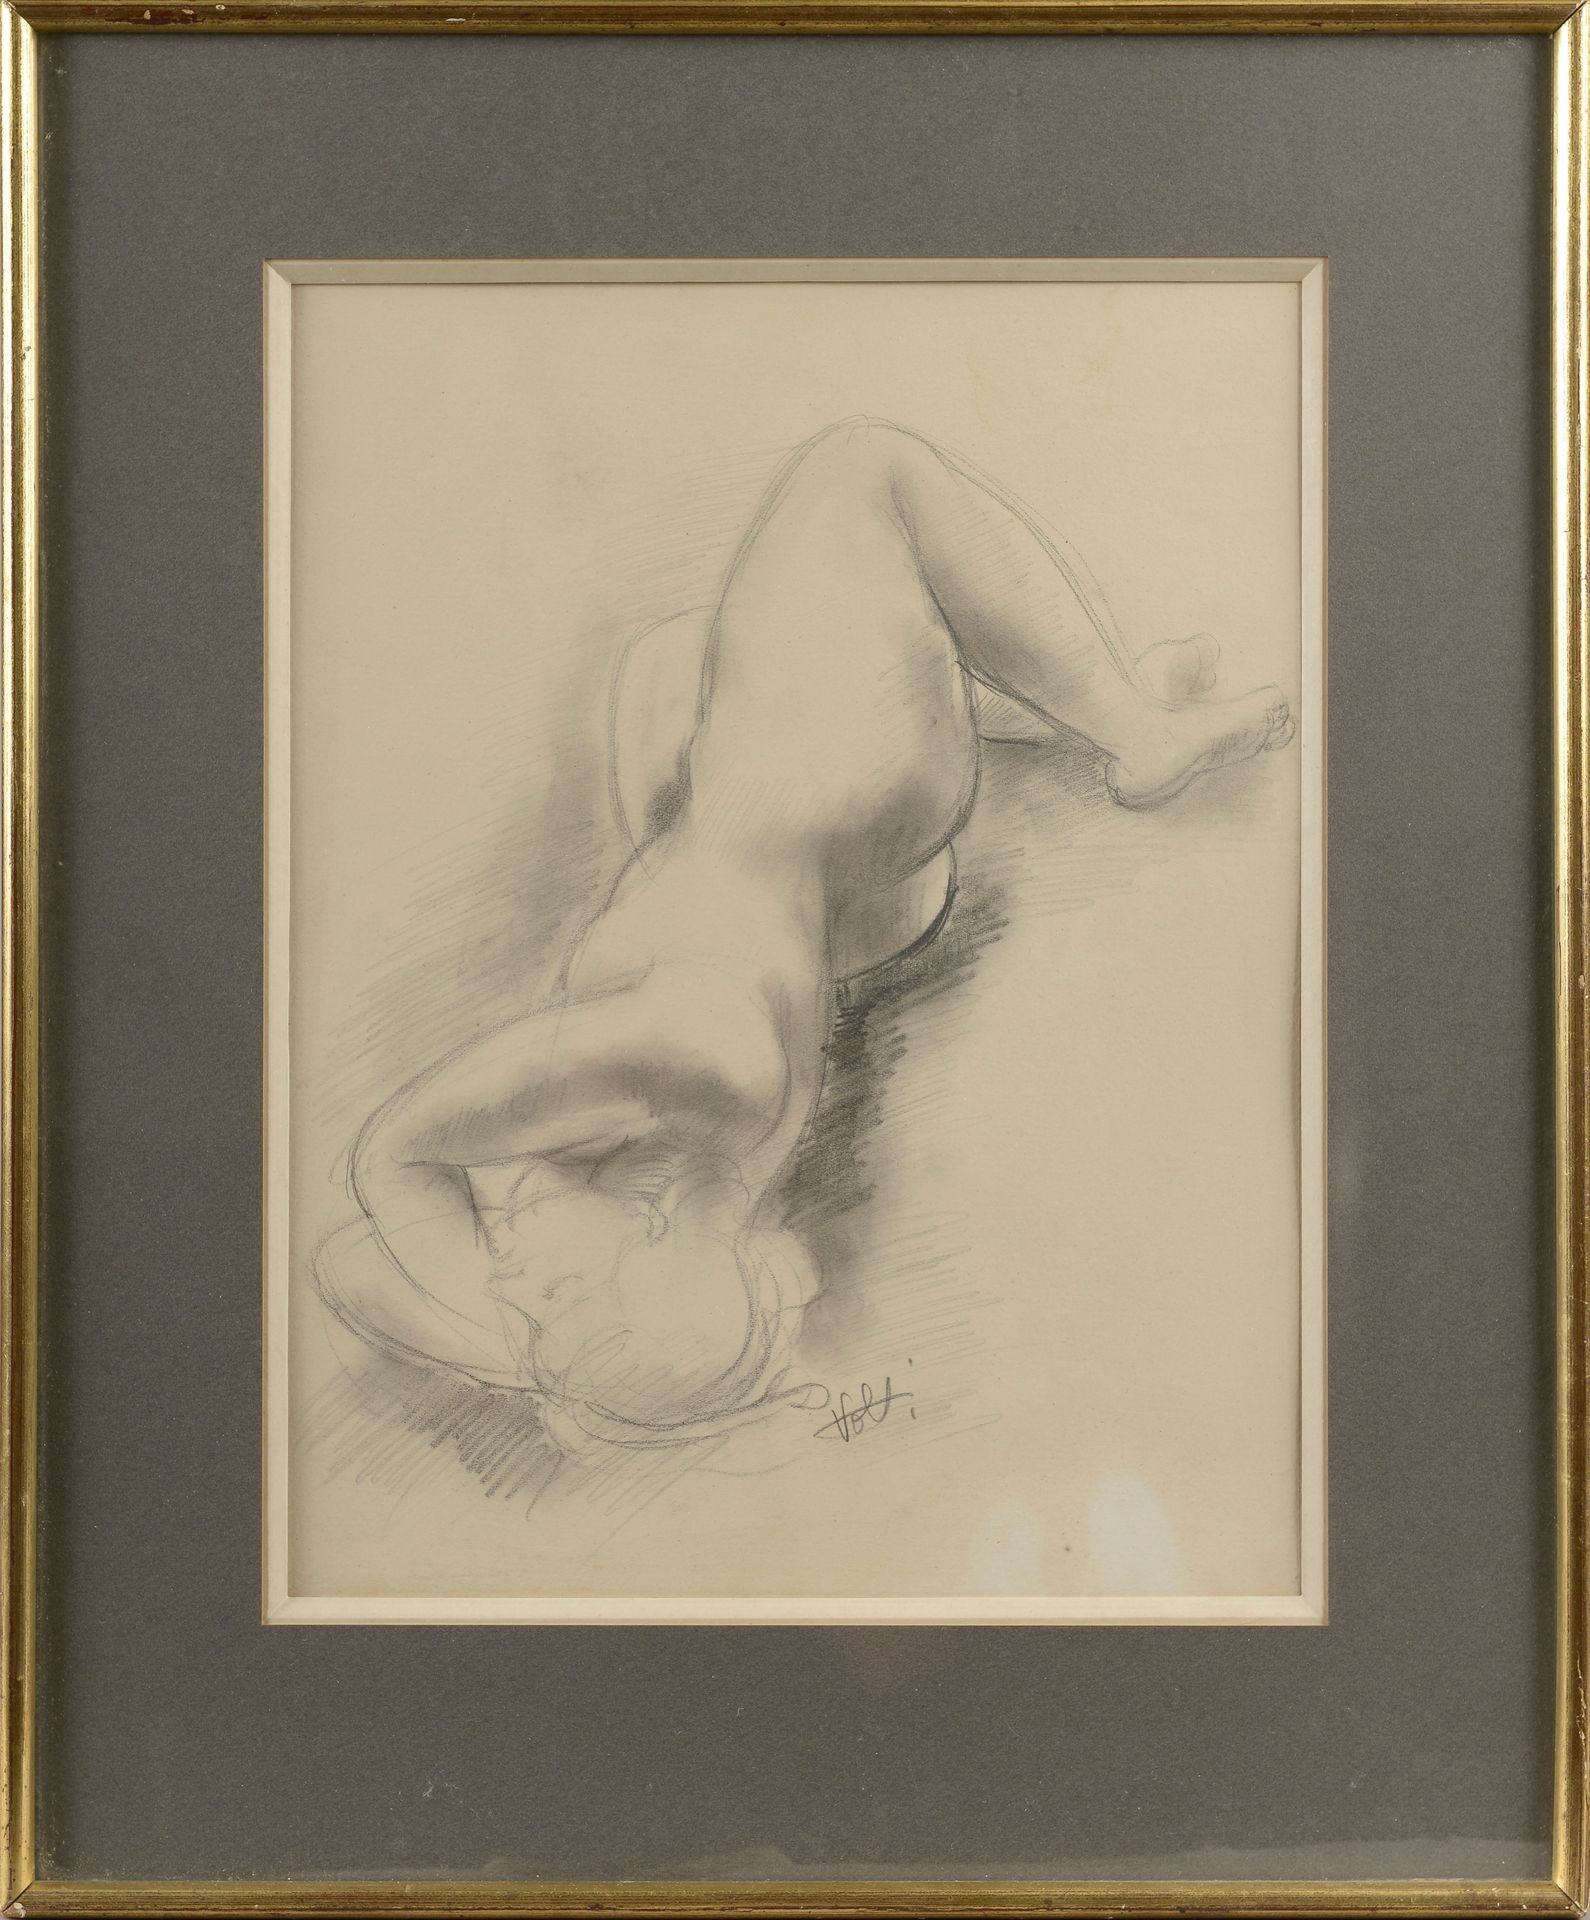 Null Antoniucci VOLTI (1915-1989).

Sleeping female nude.

Black pencil drawing &hellip;